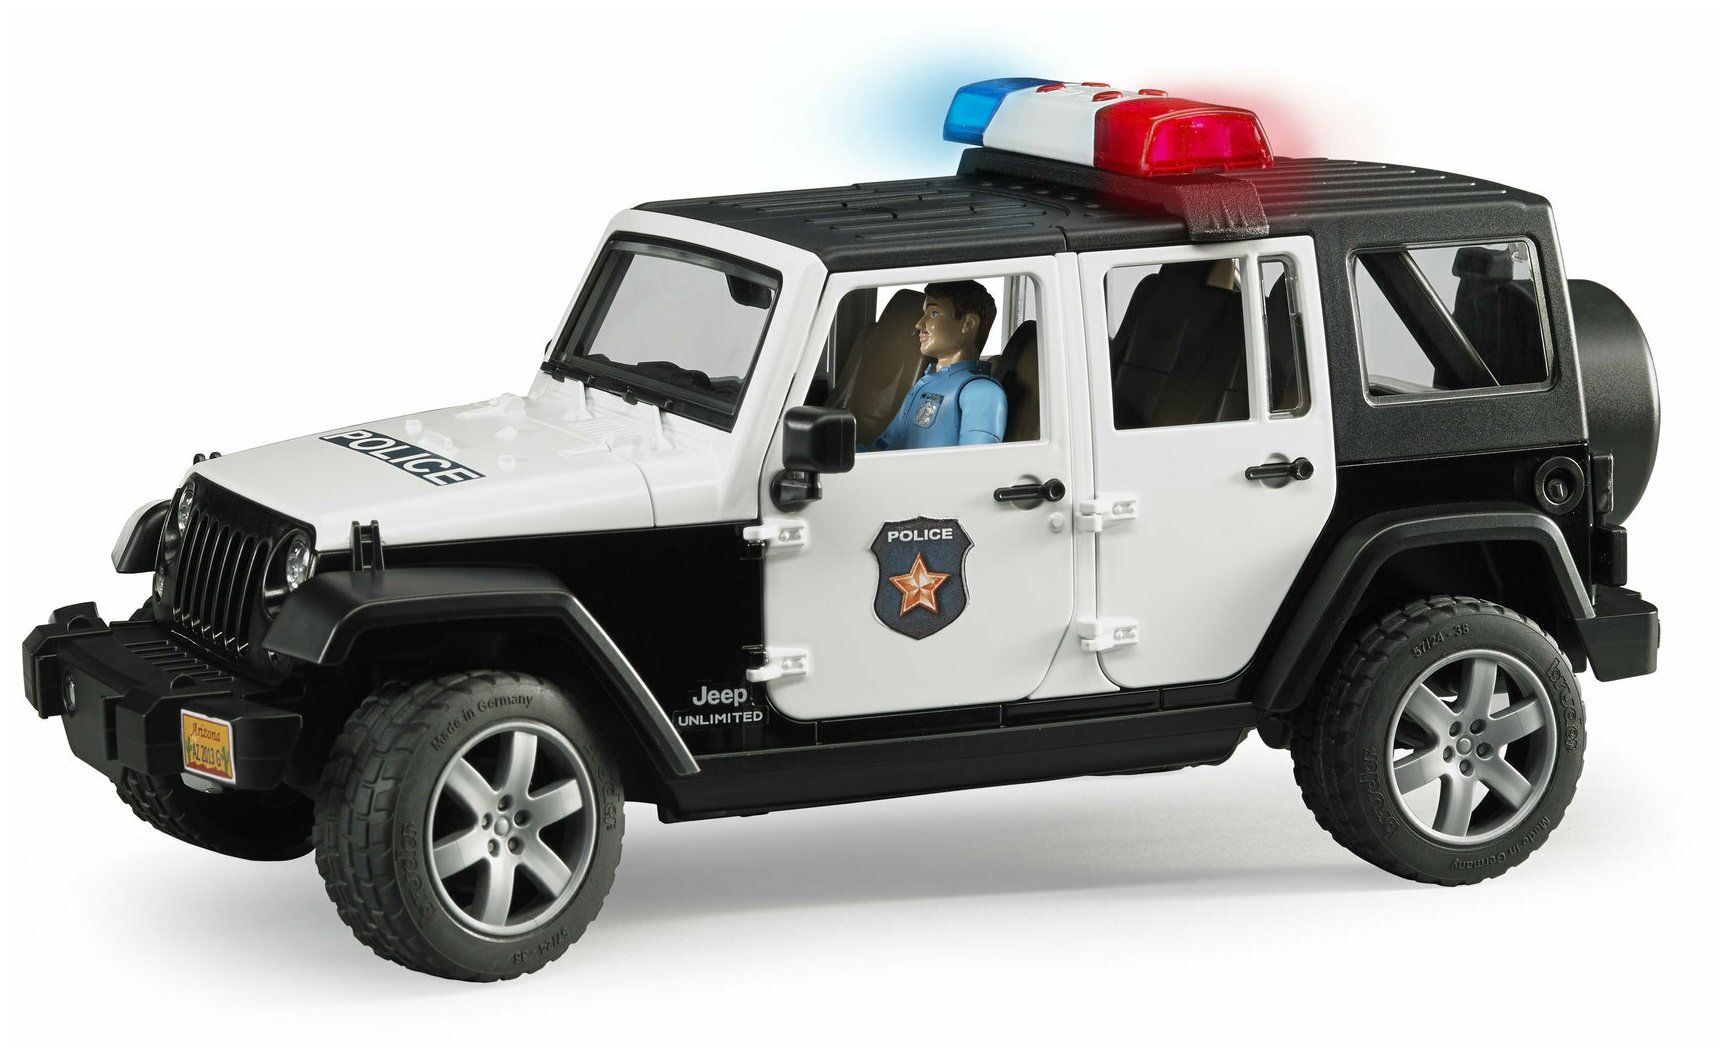 Bruder Брудер Внедорожник Jeep Wrangler Unlimited Rubicon Полиция с фигуркой 02-526 с 3 лет